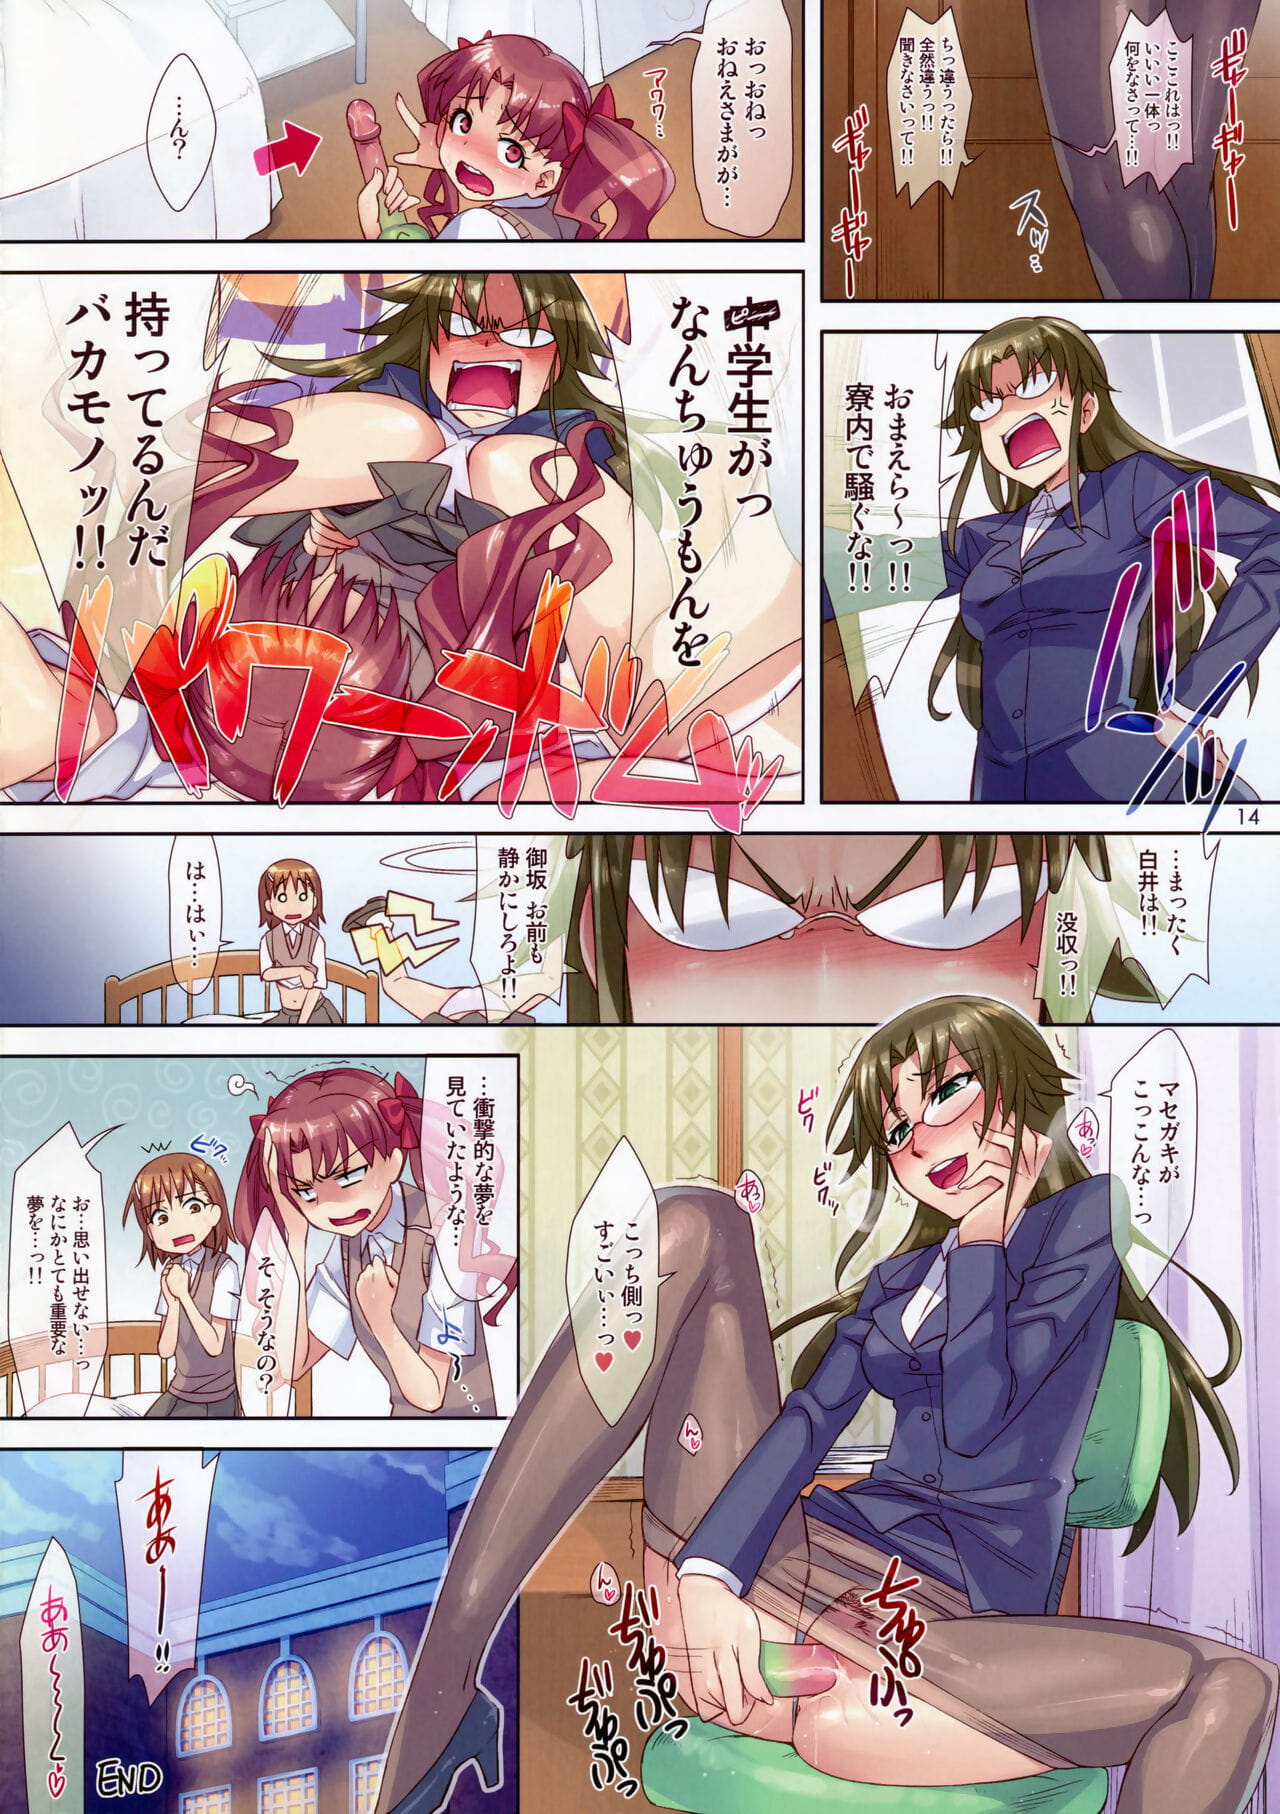 comic1☆4 redrop миямото дым оцумами на рельсотрон Свет команда нет рельсотрон decensored